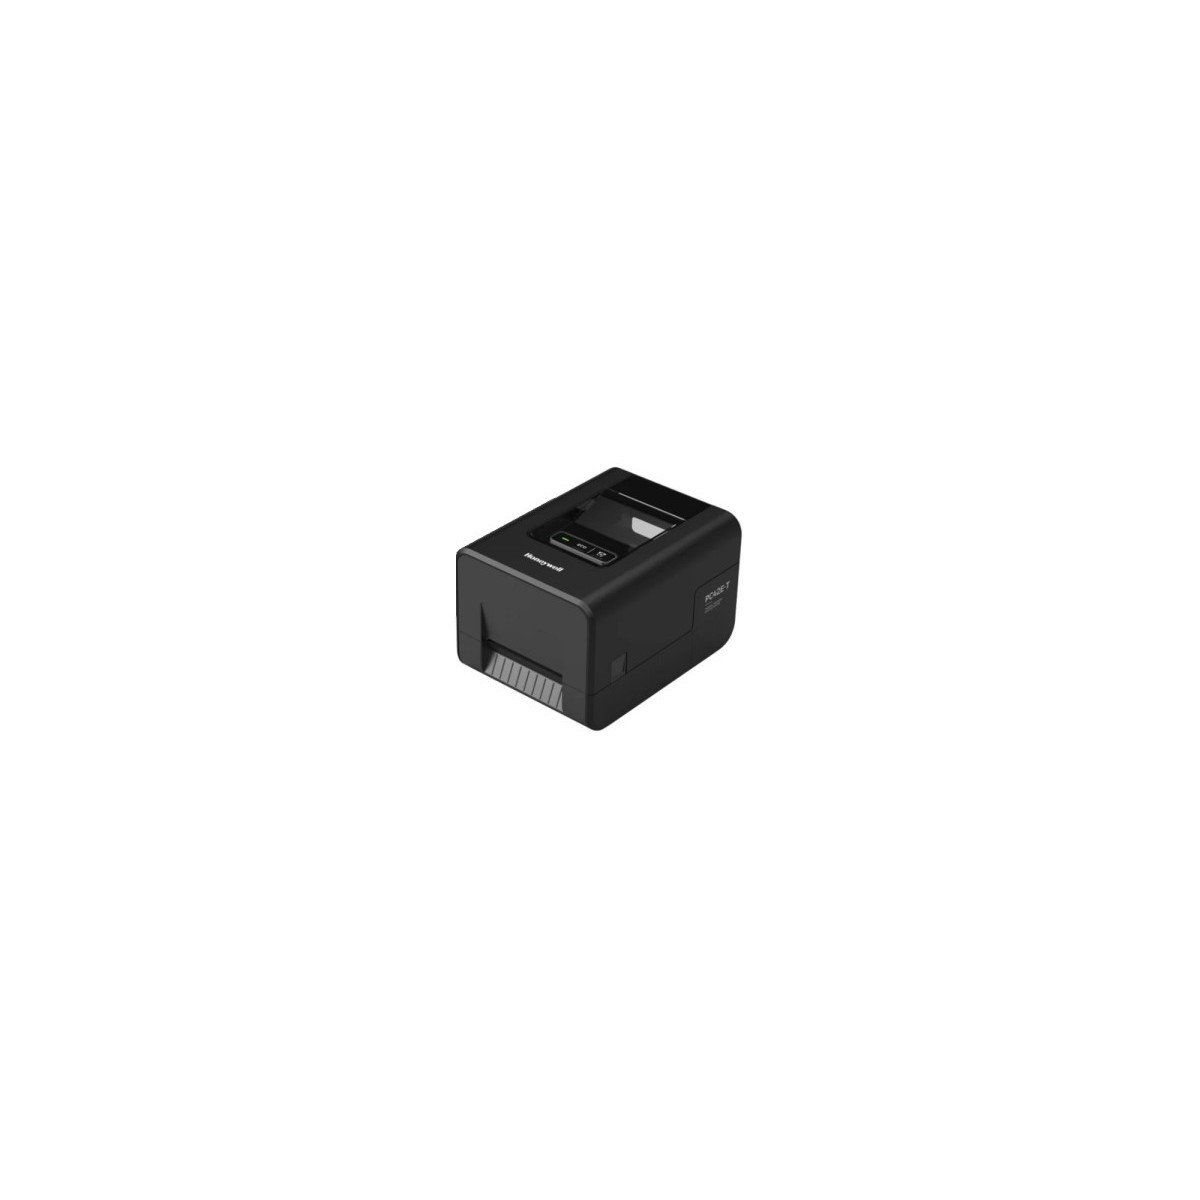 HONEYWELL PC42E-T USB Ethernet 300dpi Bl ack 10.5´´ no power cord - Printer - 300 dpi